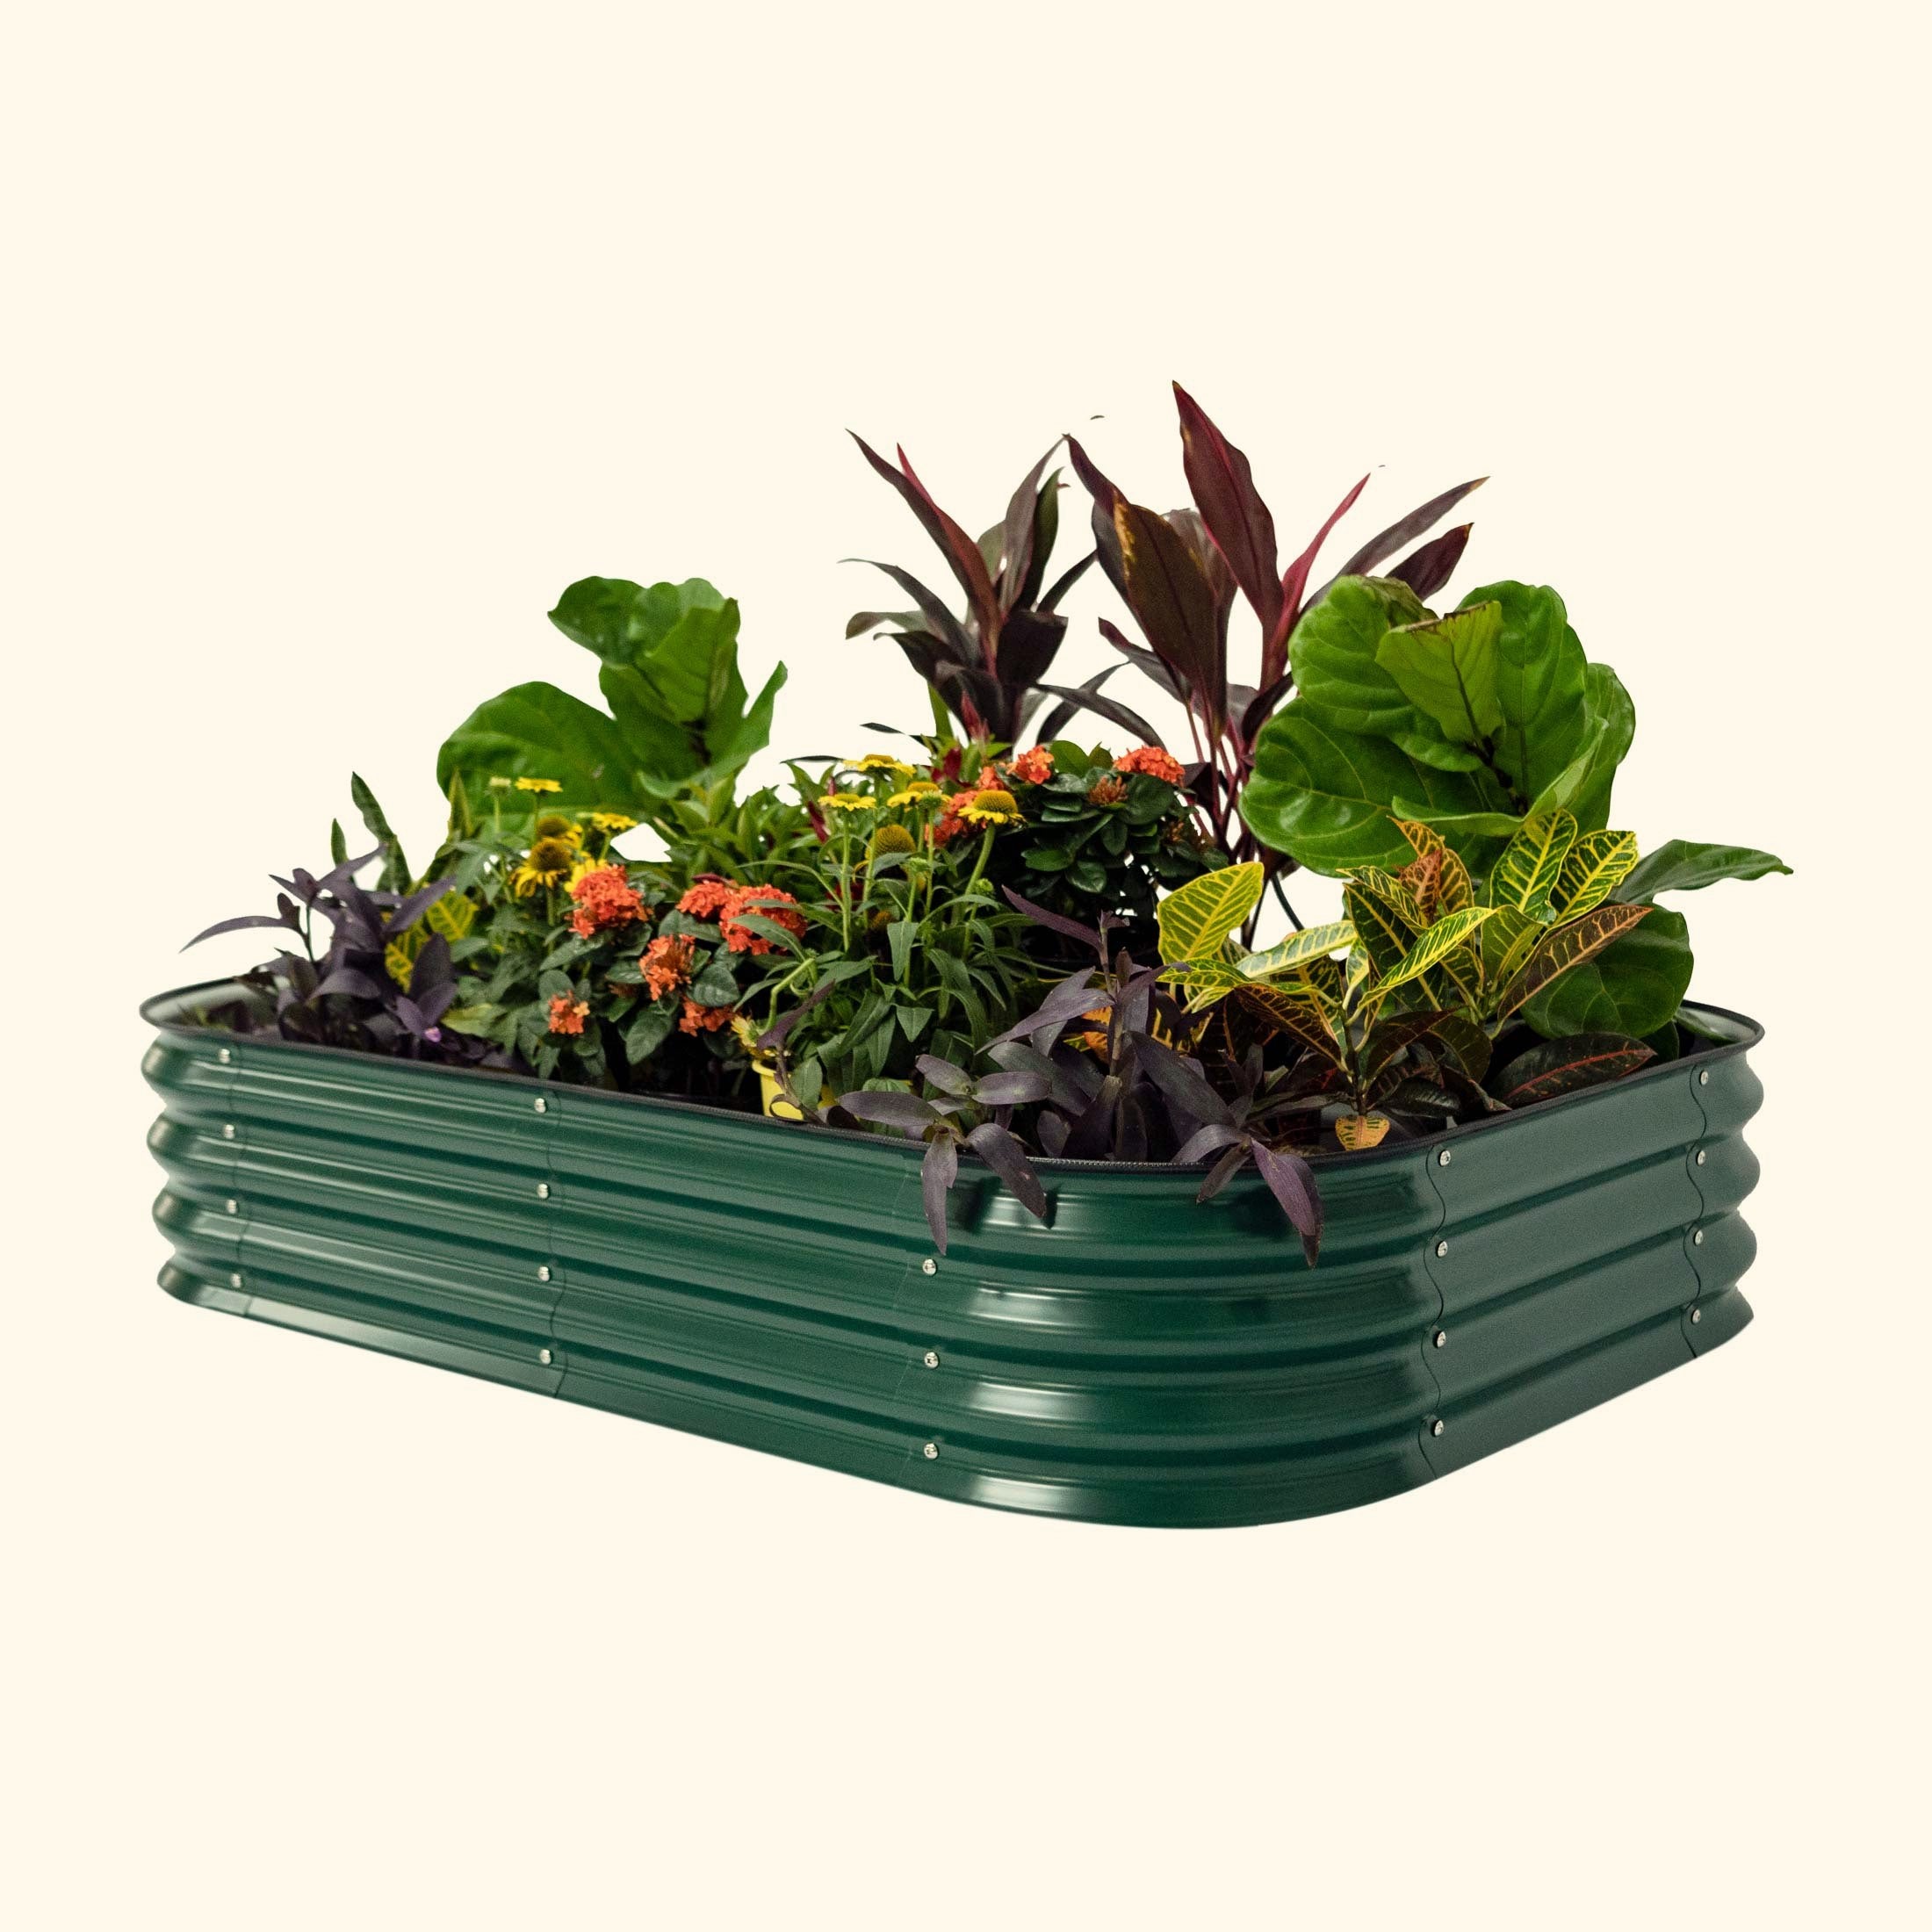 Vego Graden | 11" Tall 6 In 1 Modular Metal Raised Garden Bed Kit British Green